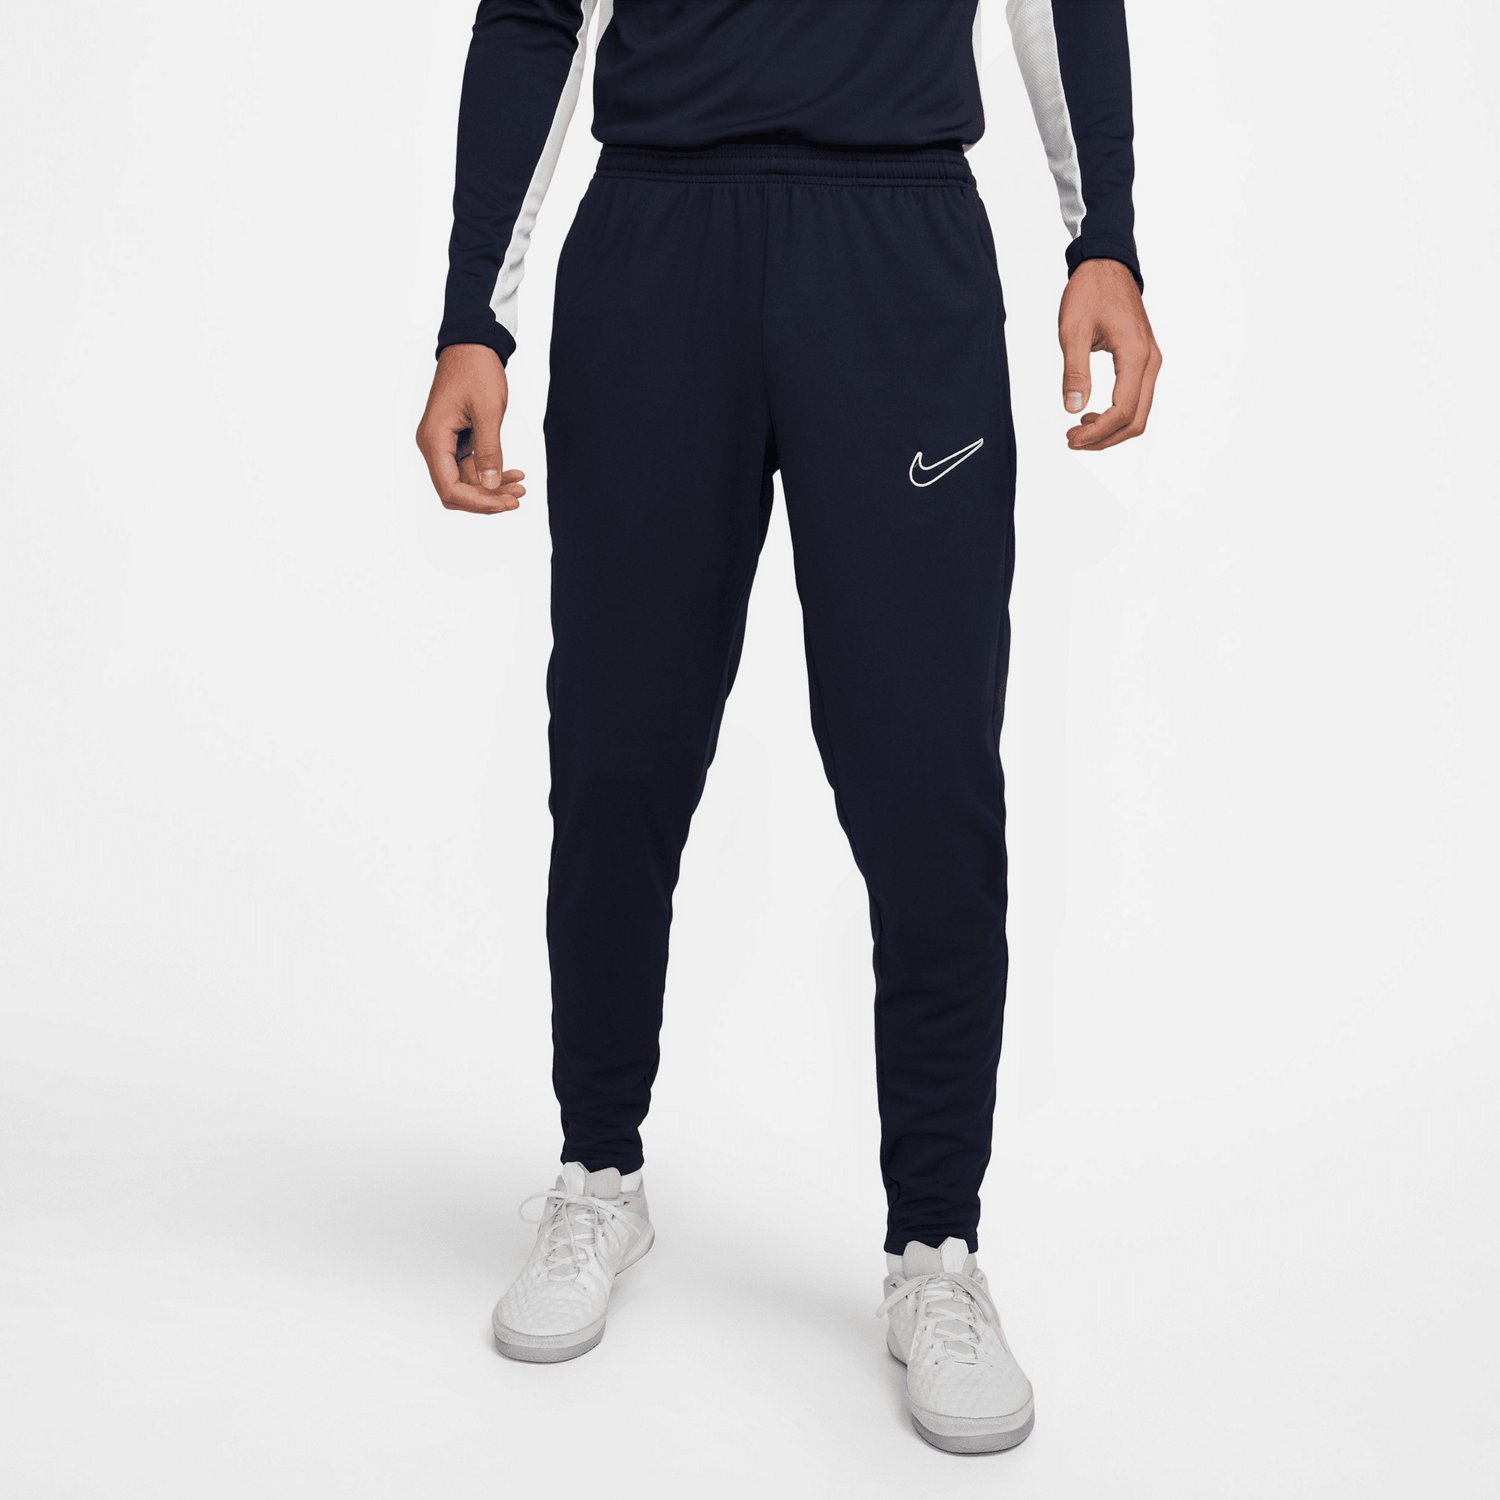 Nike Dri-Fit Academy Men's Soccer Pants - Black/White